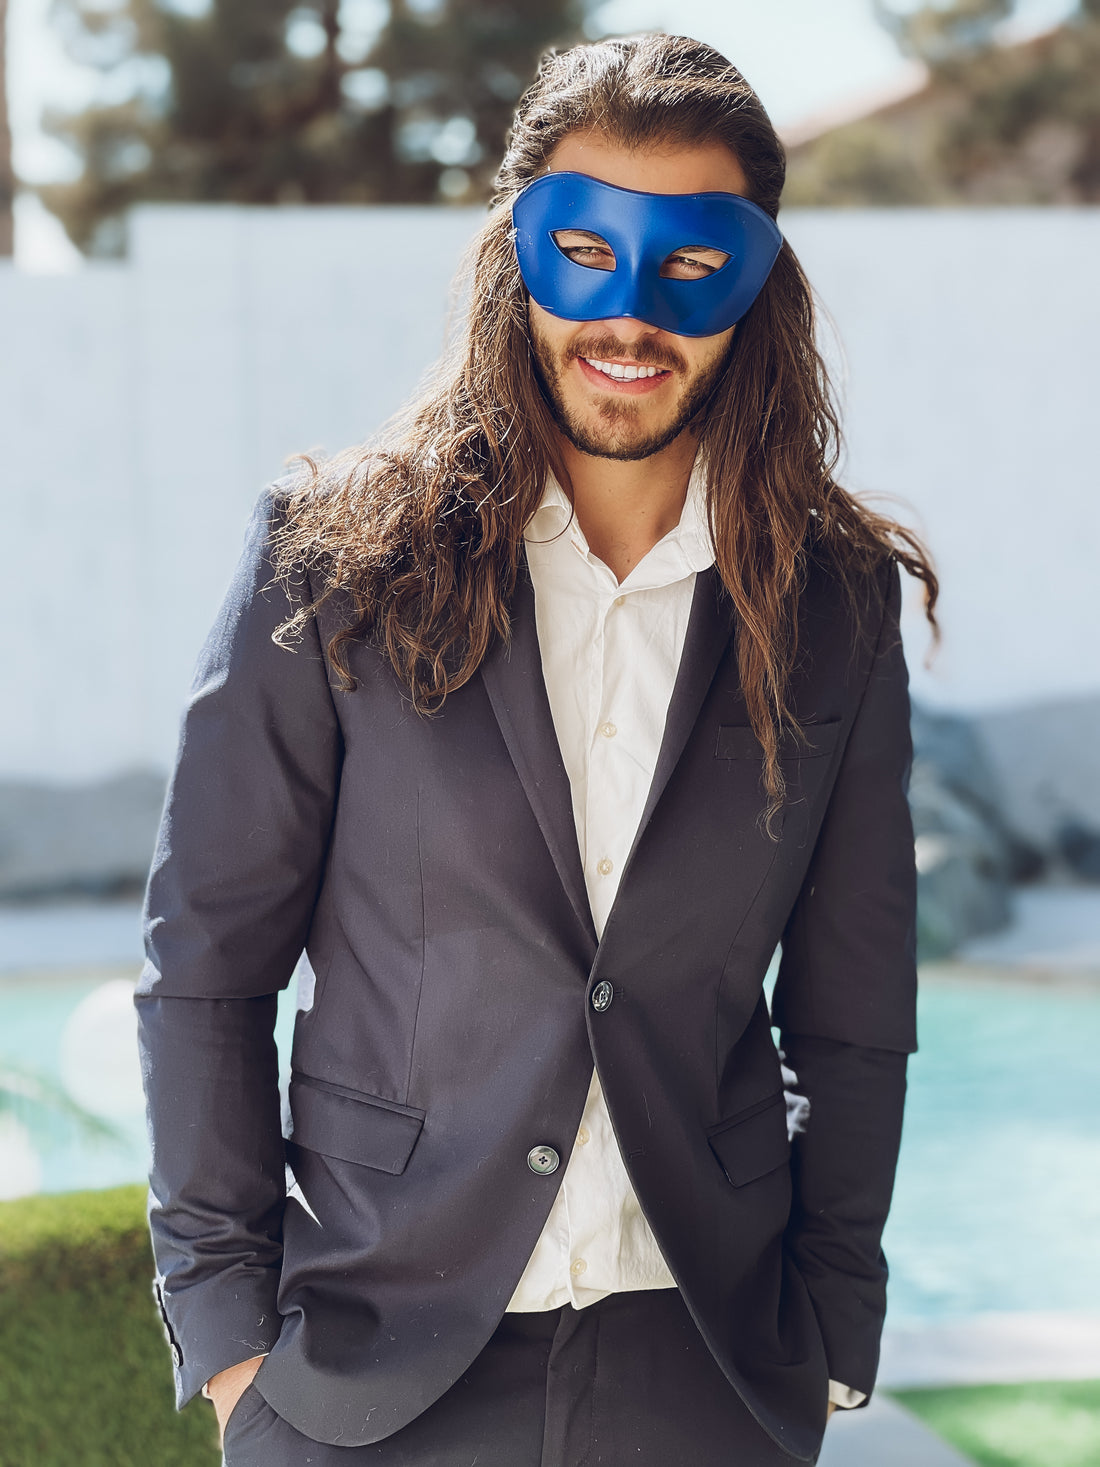 Masquerade Mask for Men: A Halloween Essential